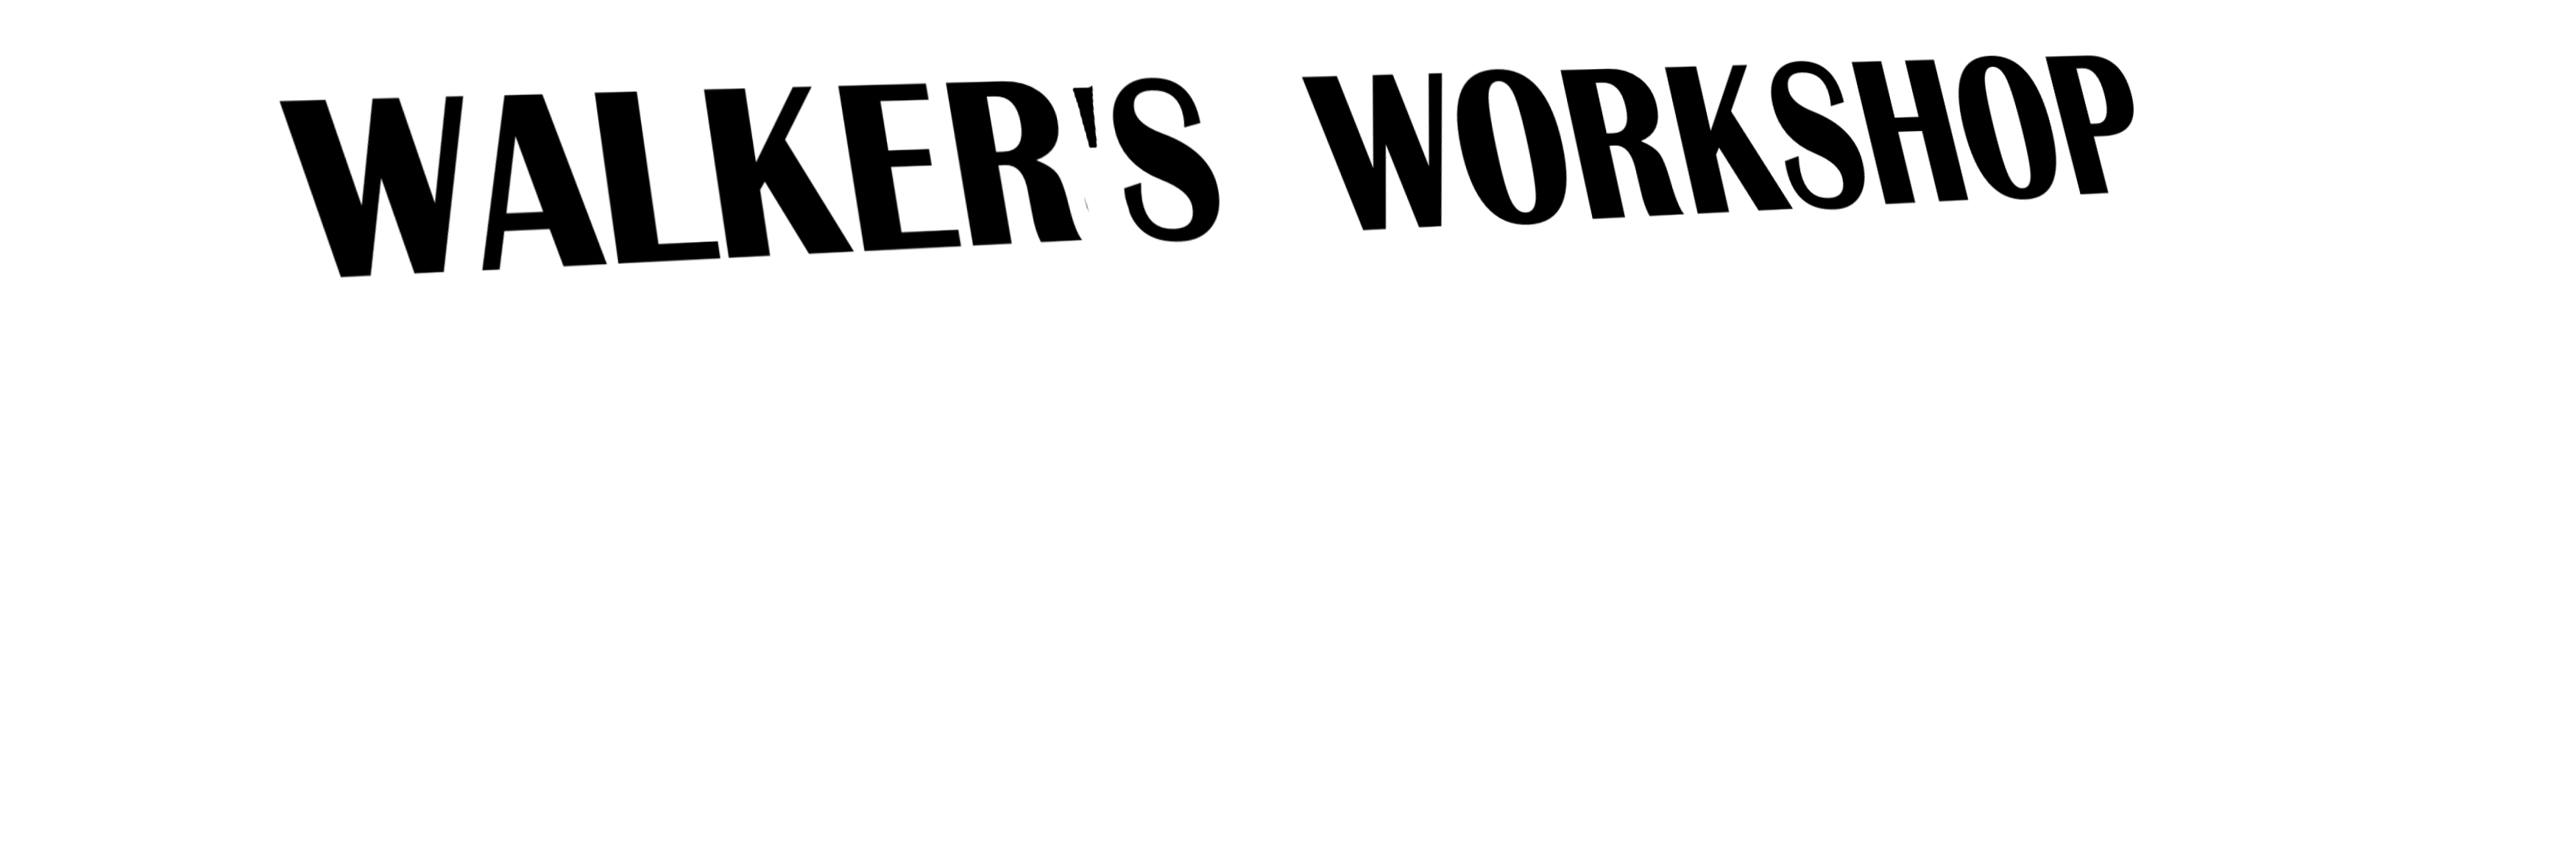 Walker's Workshop - The Gunsmith company